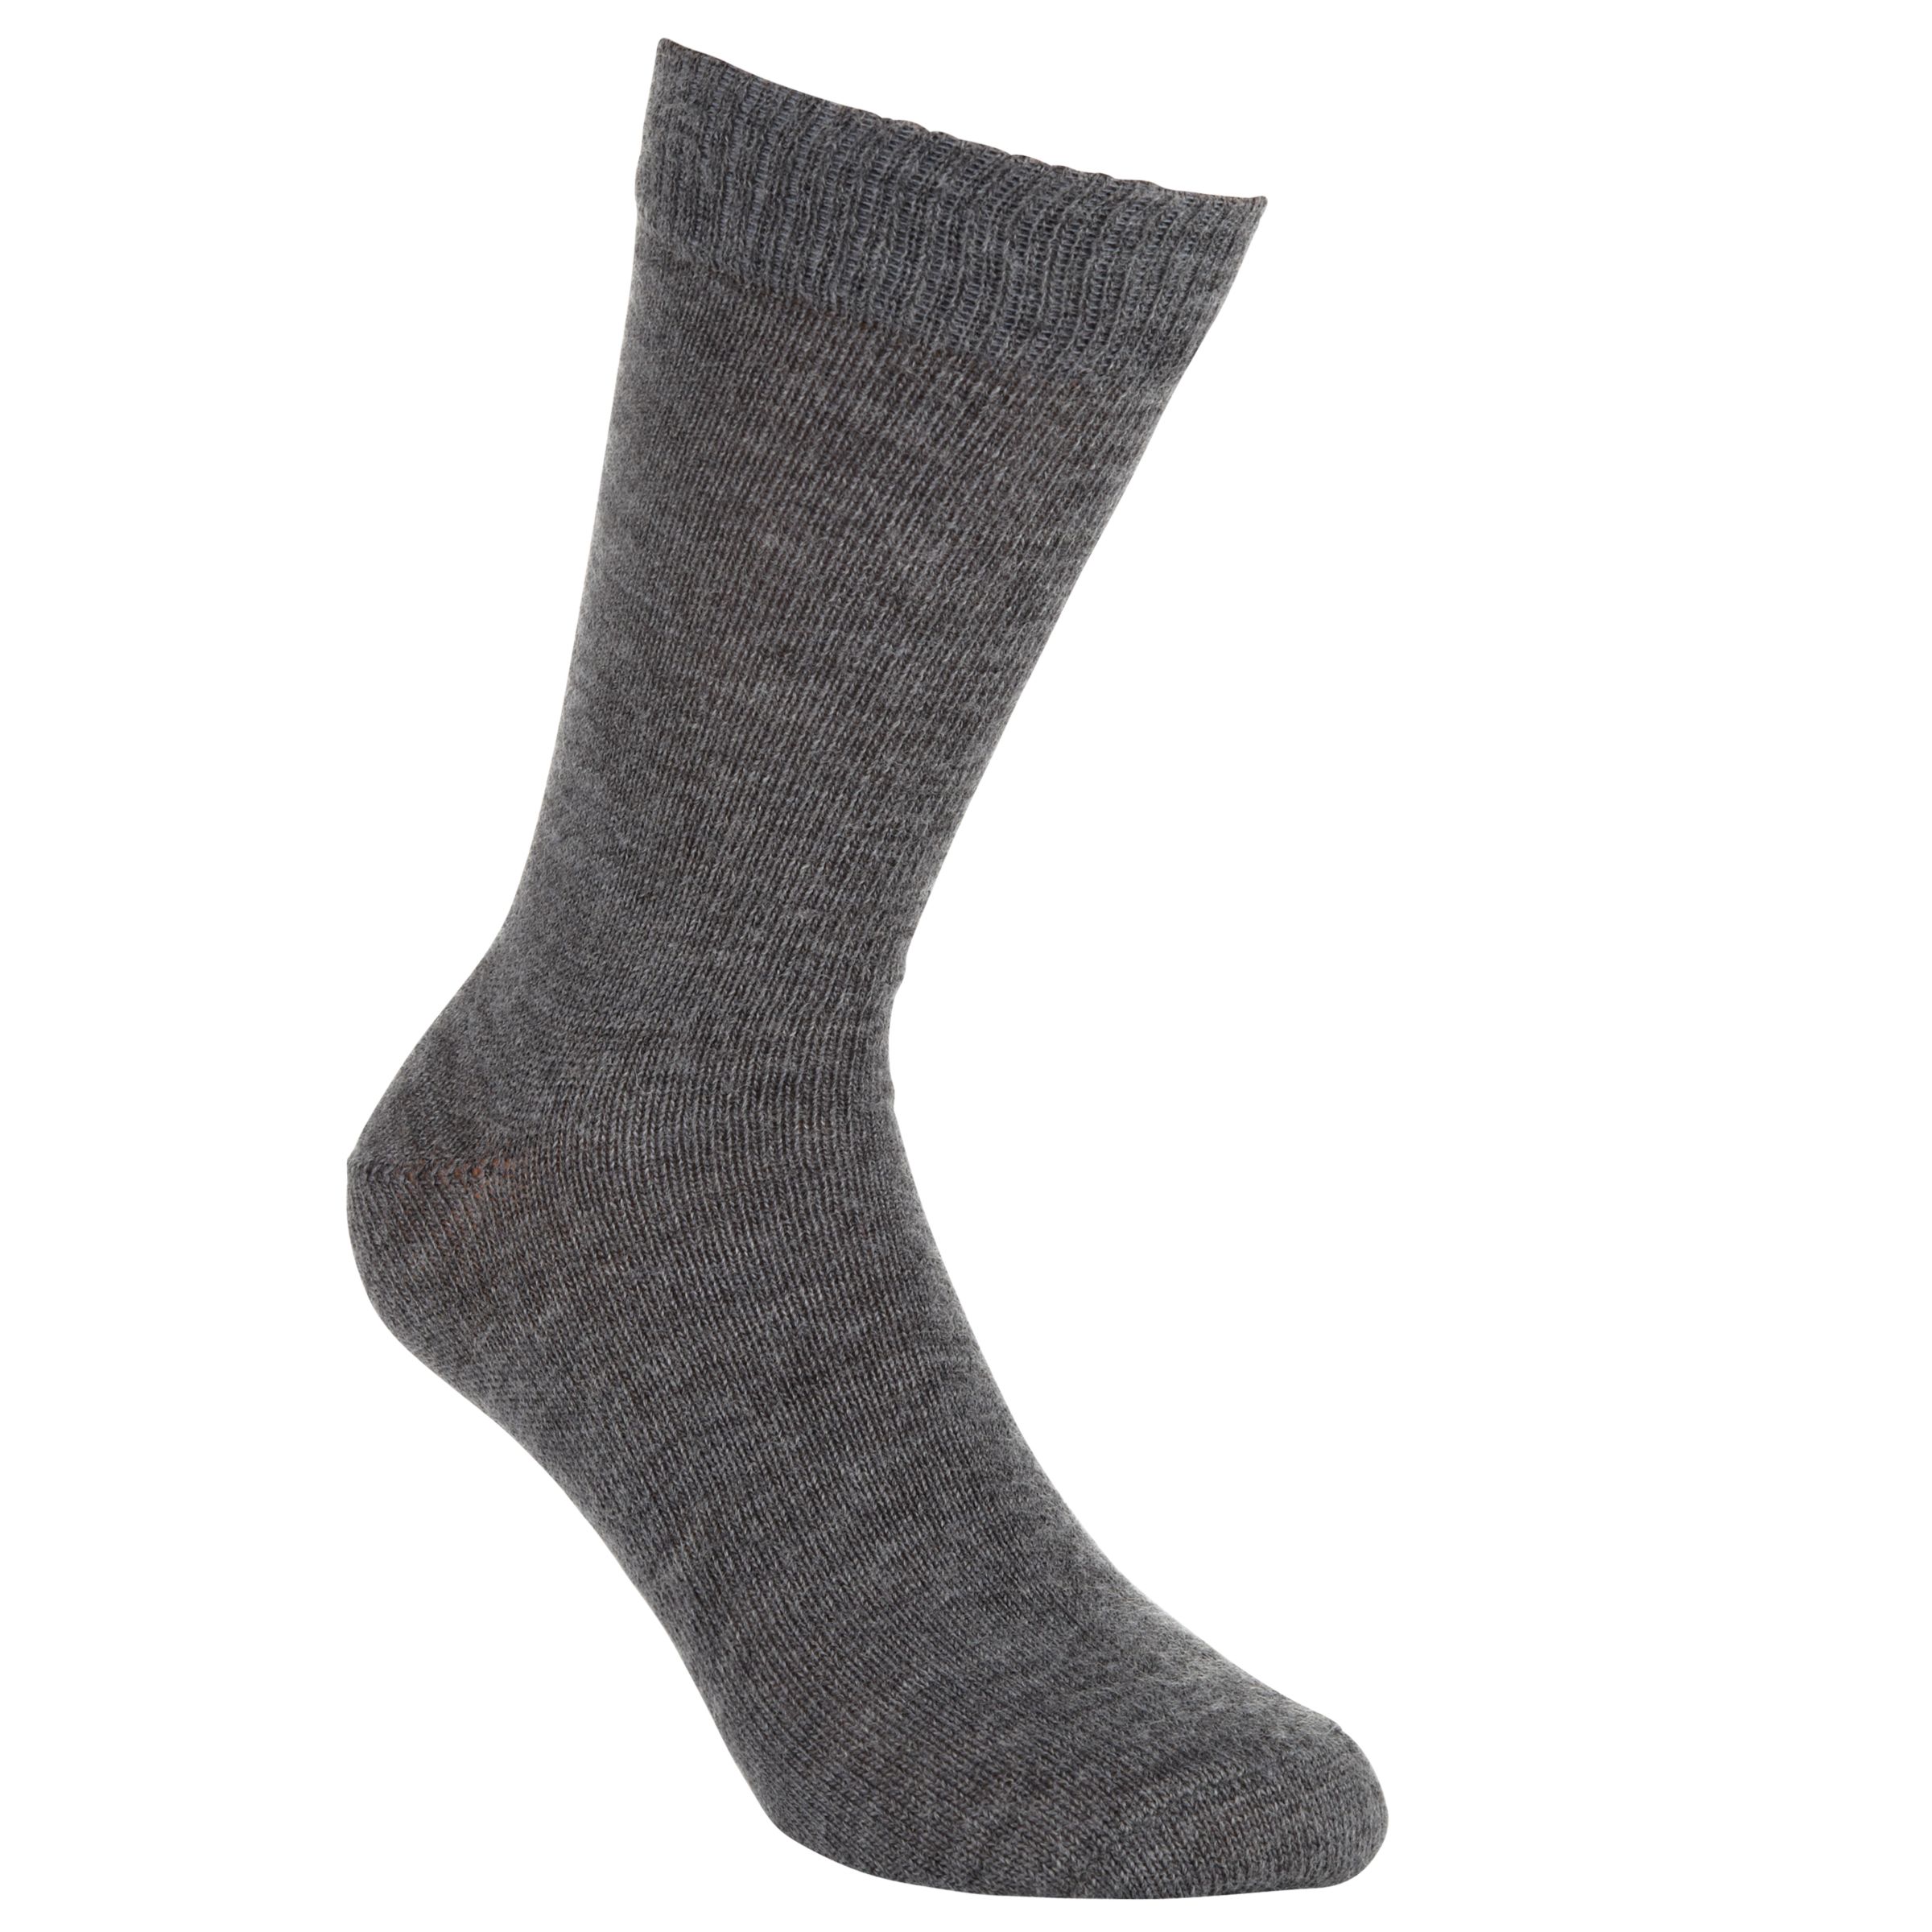 John Lewis & Partners Made In England Merino Socks, Grey, S